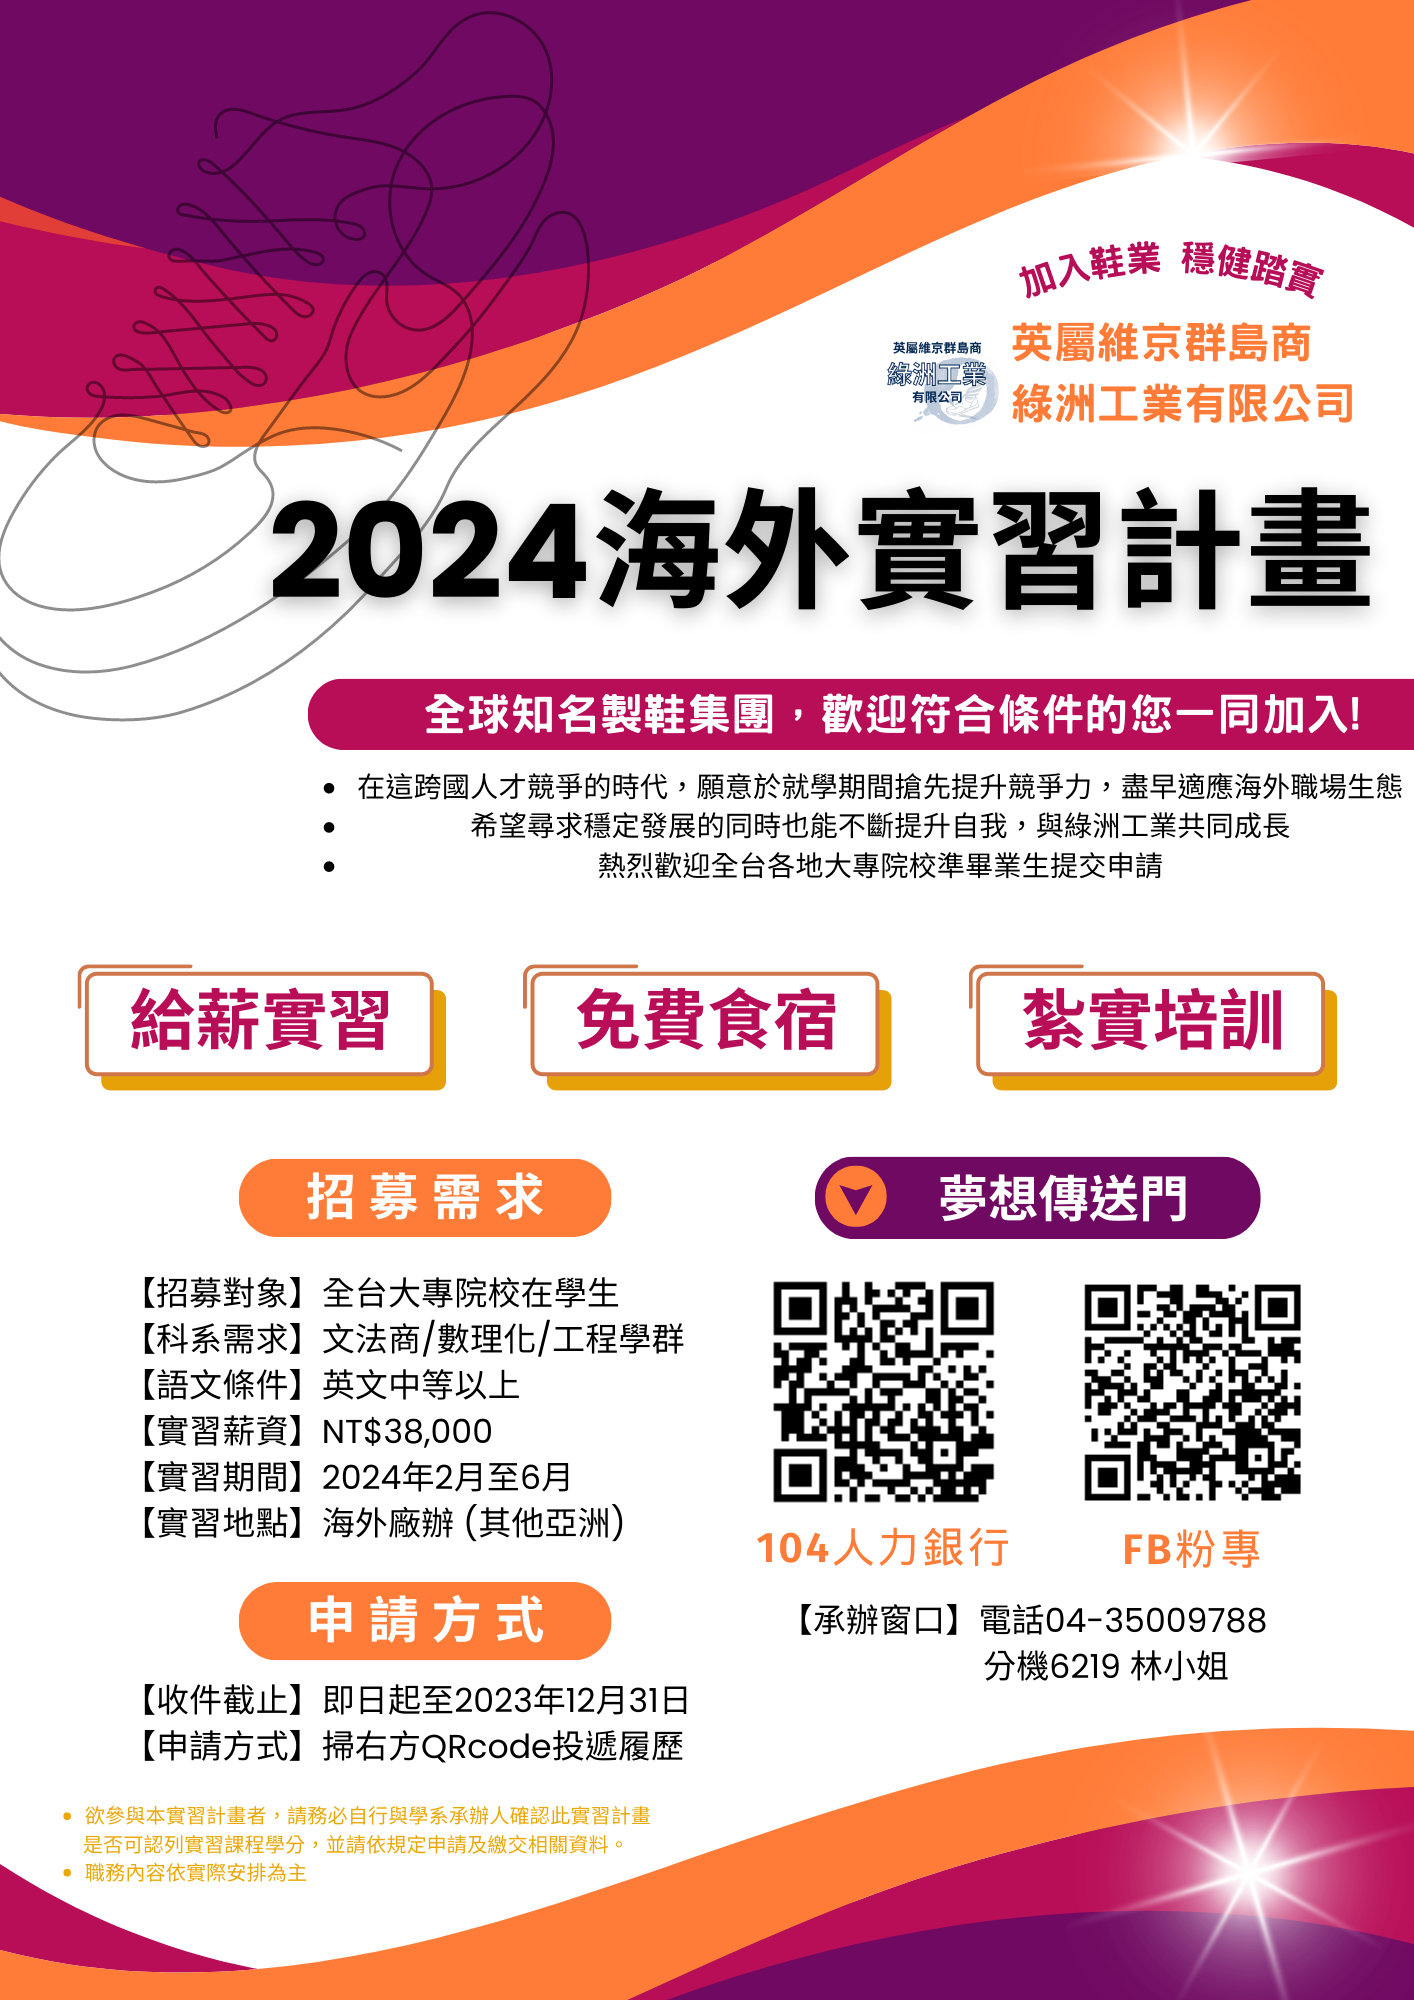 Featured image for “綠洲工業【2024 Internship Program】海外實習”